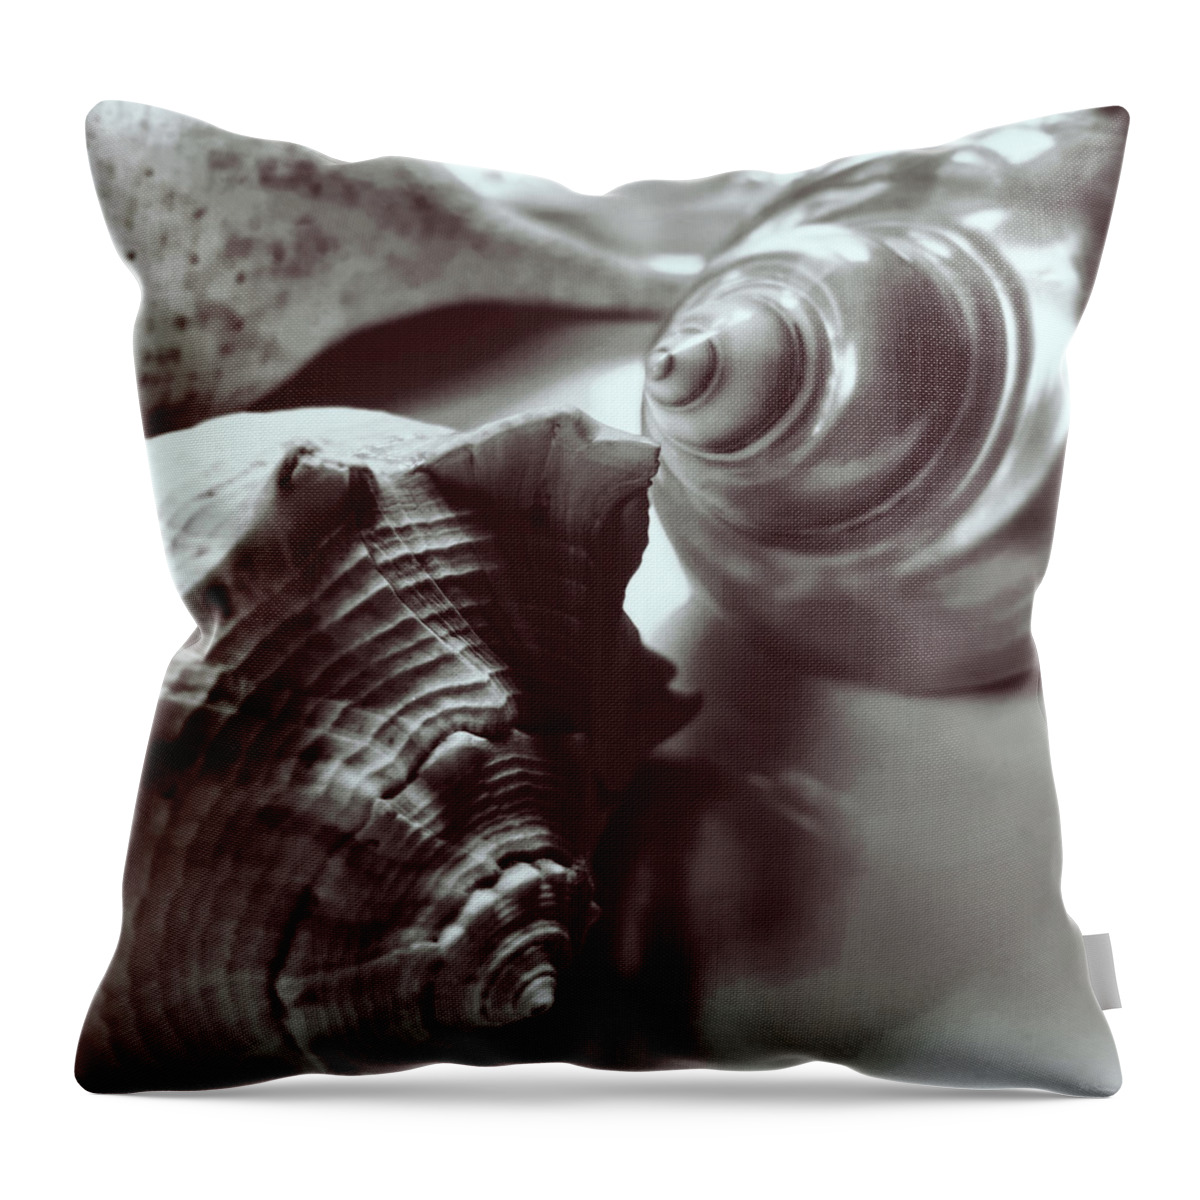 Monochrome Throw Pillow featuring the photograph Three Seashells Darker by Joy Sussman